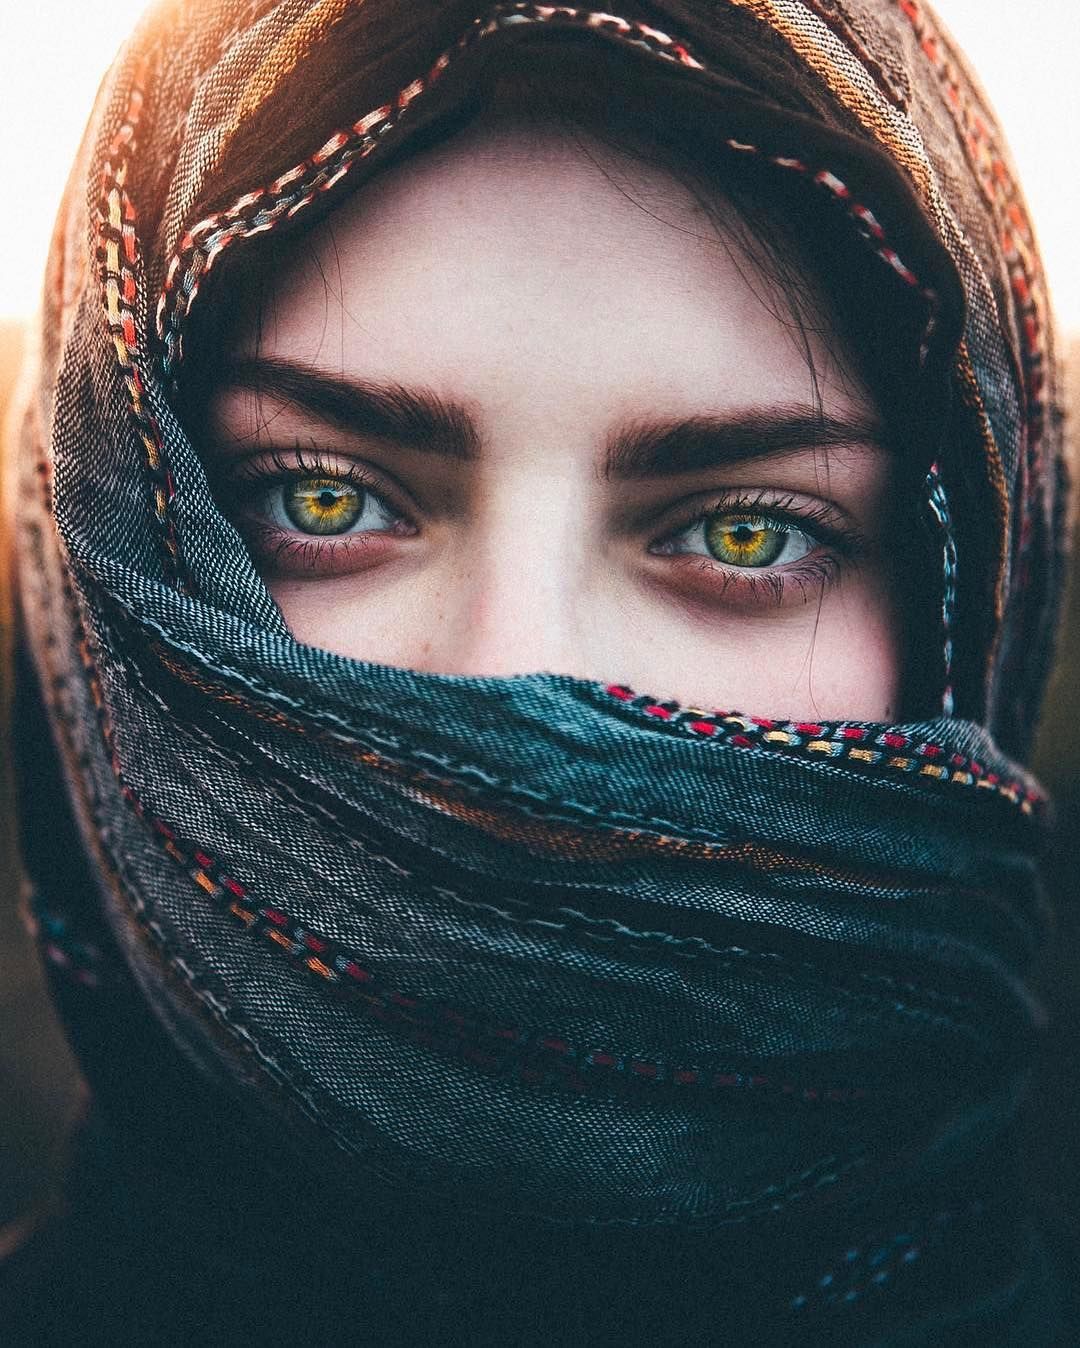 niqab目の壁紙,面,眼,眉,青い,緑